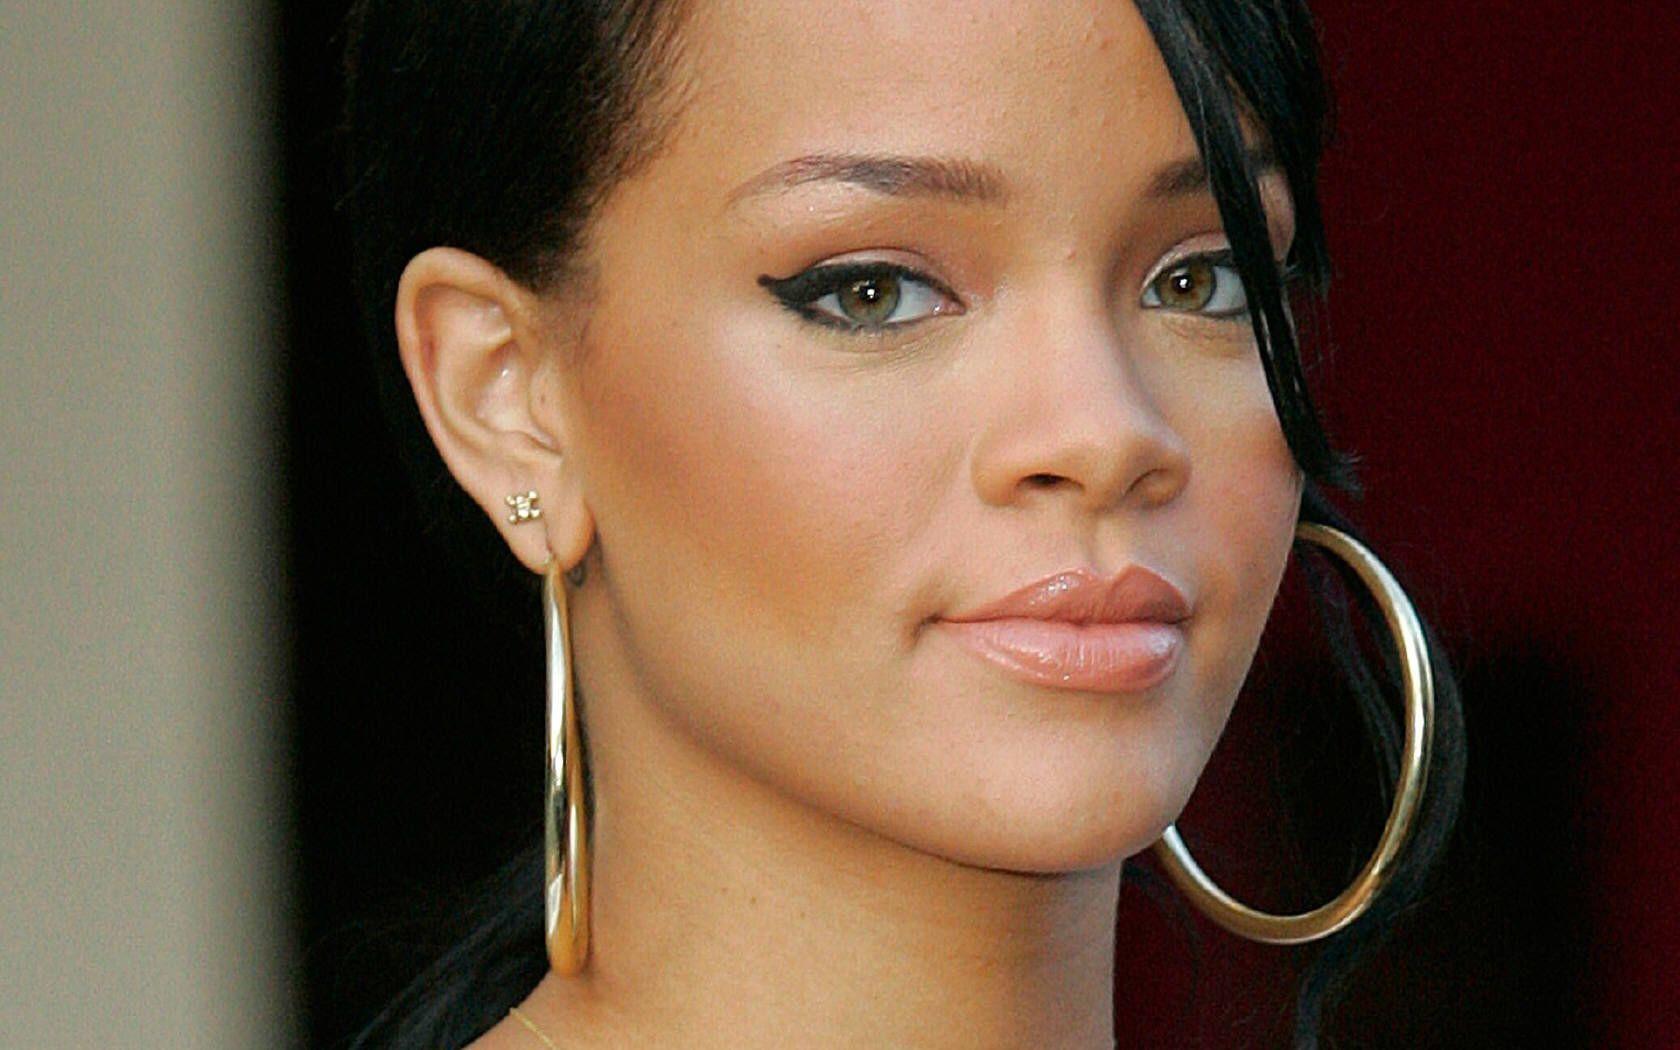 Rihanna Wallpaper HD 21393 Image. wallgraf